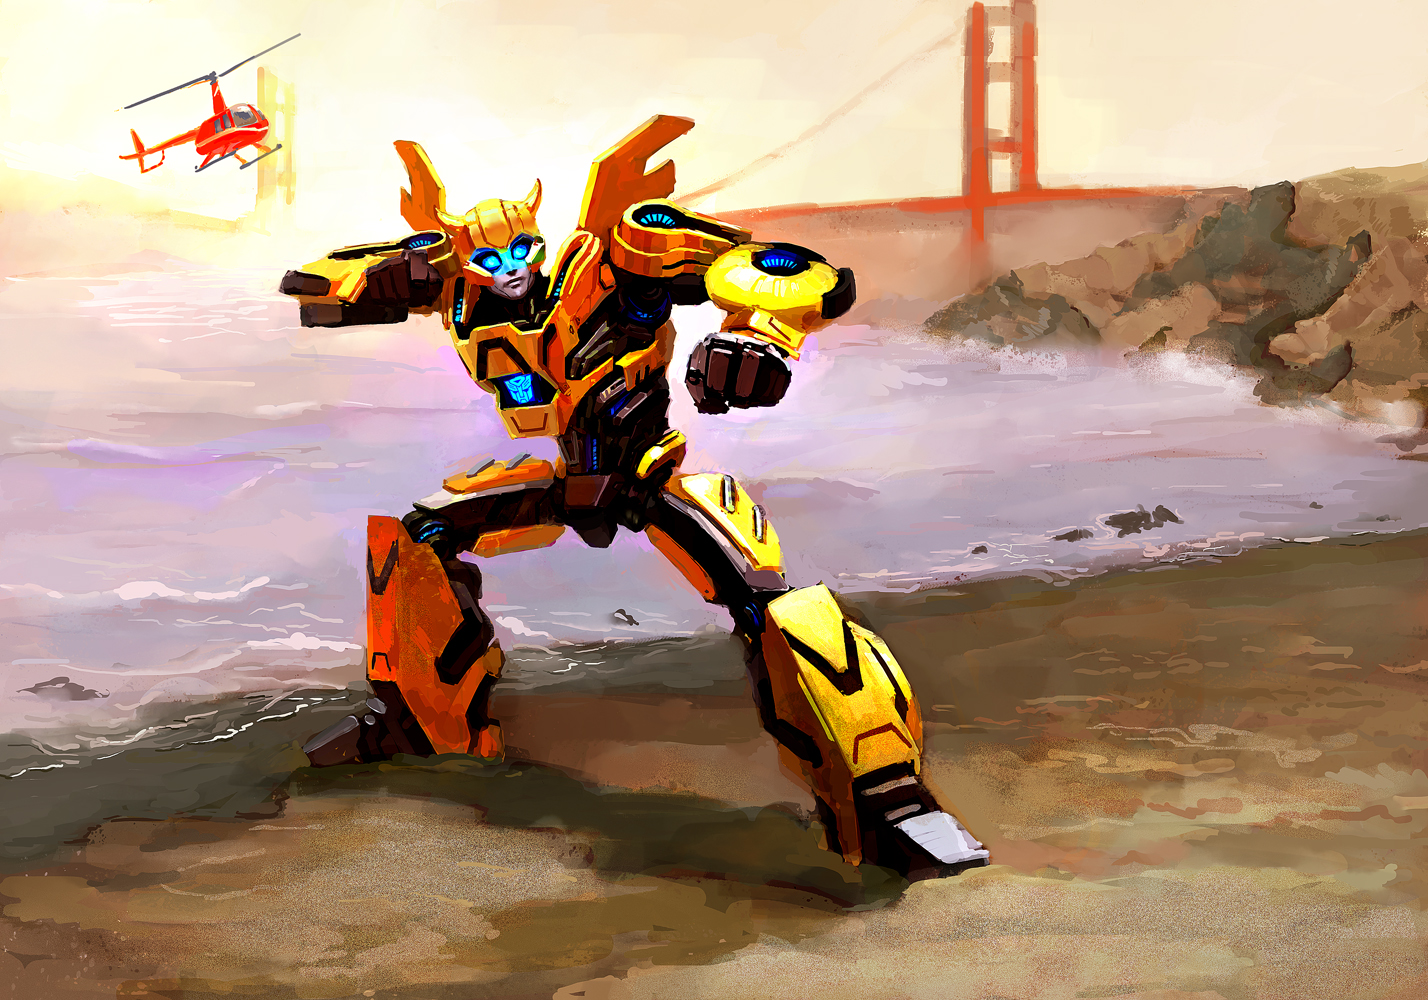 Bumblebee- Transformers Prime by jettmanas on DeviantArt